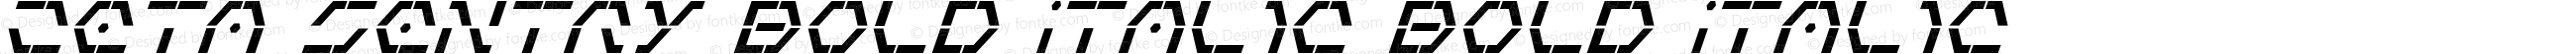 Zeta Sentry Bold Italic Bold Italic